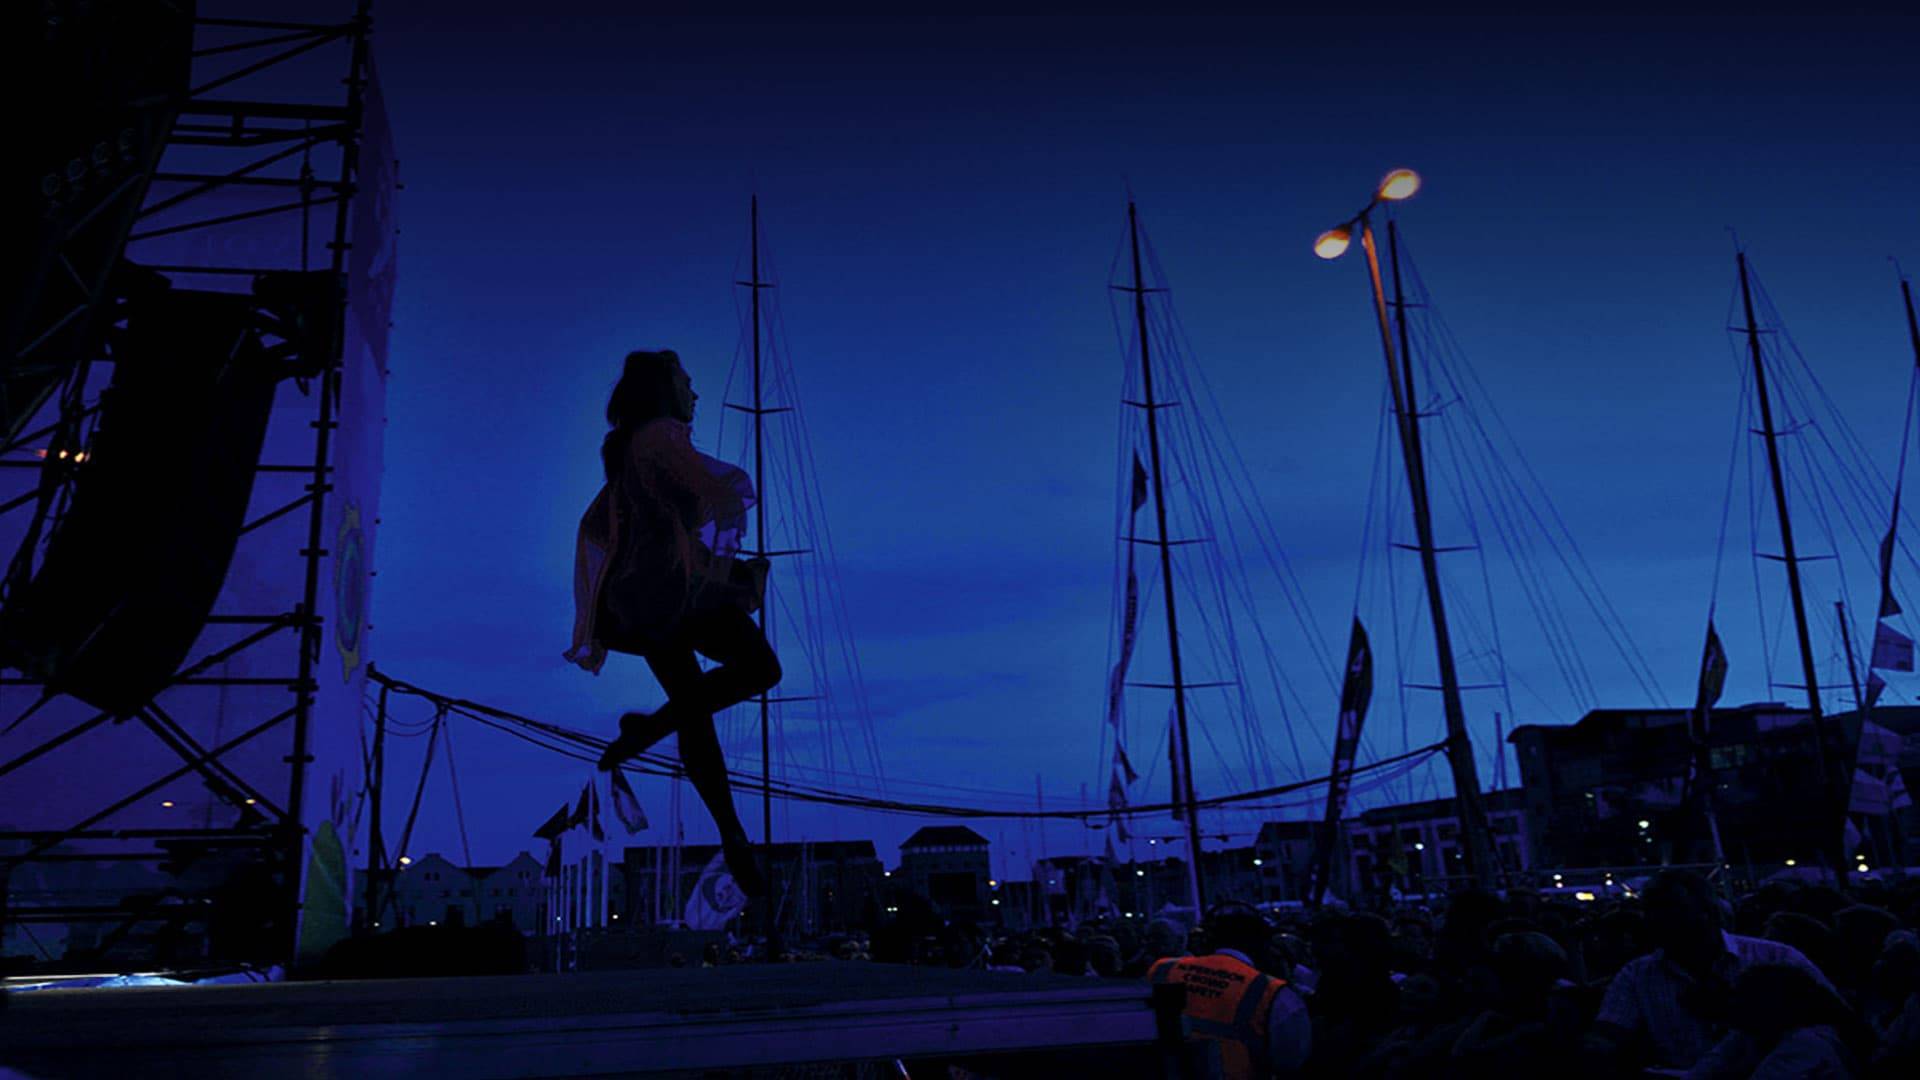 Dancer silhouette at dusk on quay 